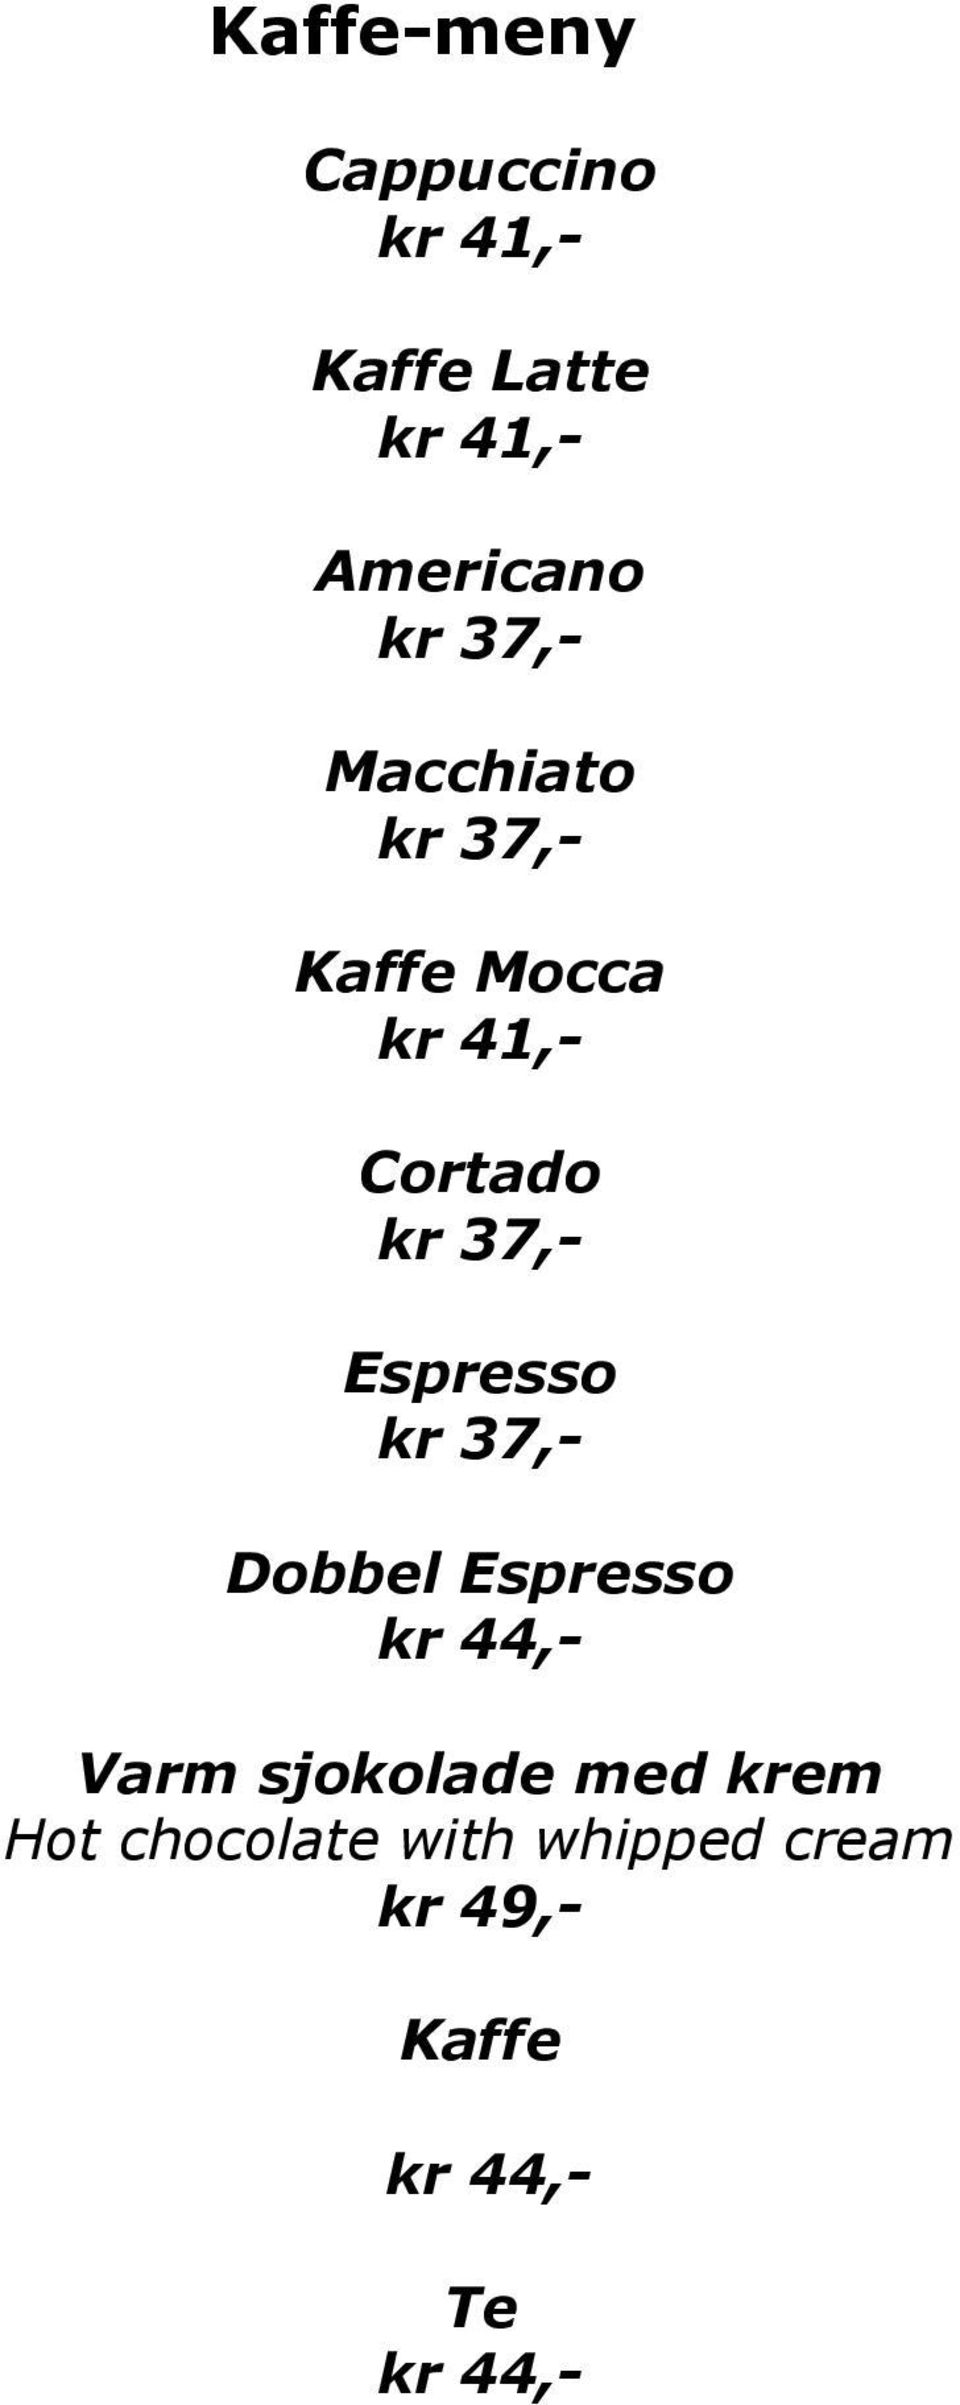 Espresso Dobbel Espresso kr 44,- Varm sjokolade med